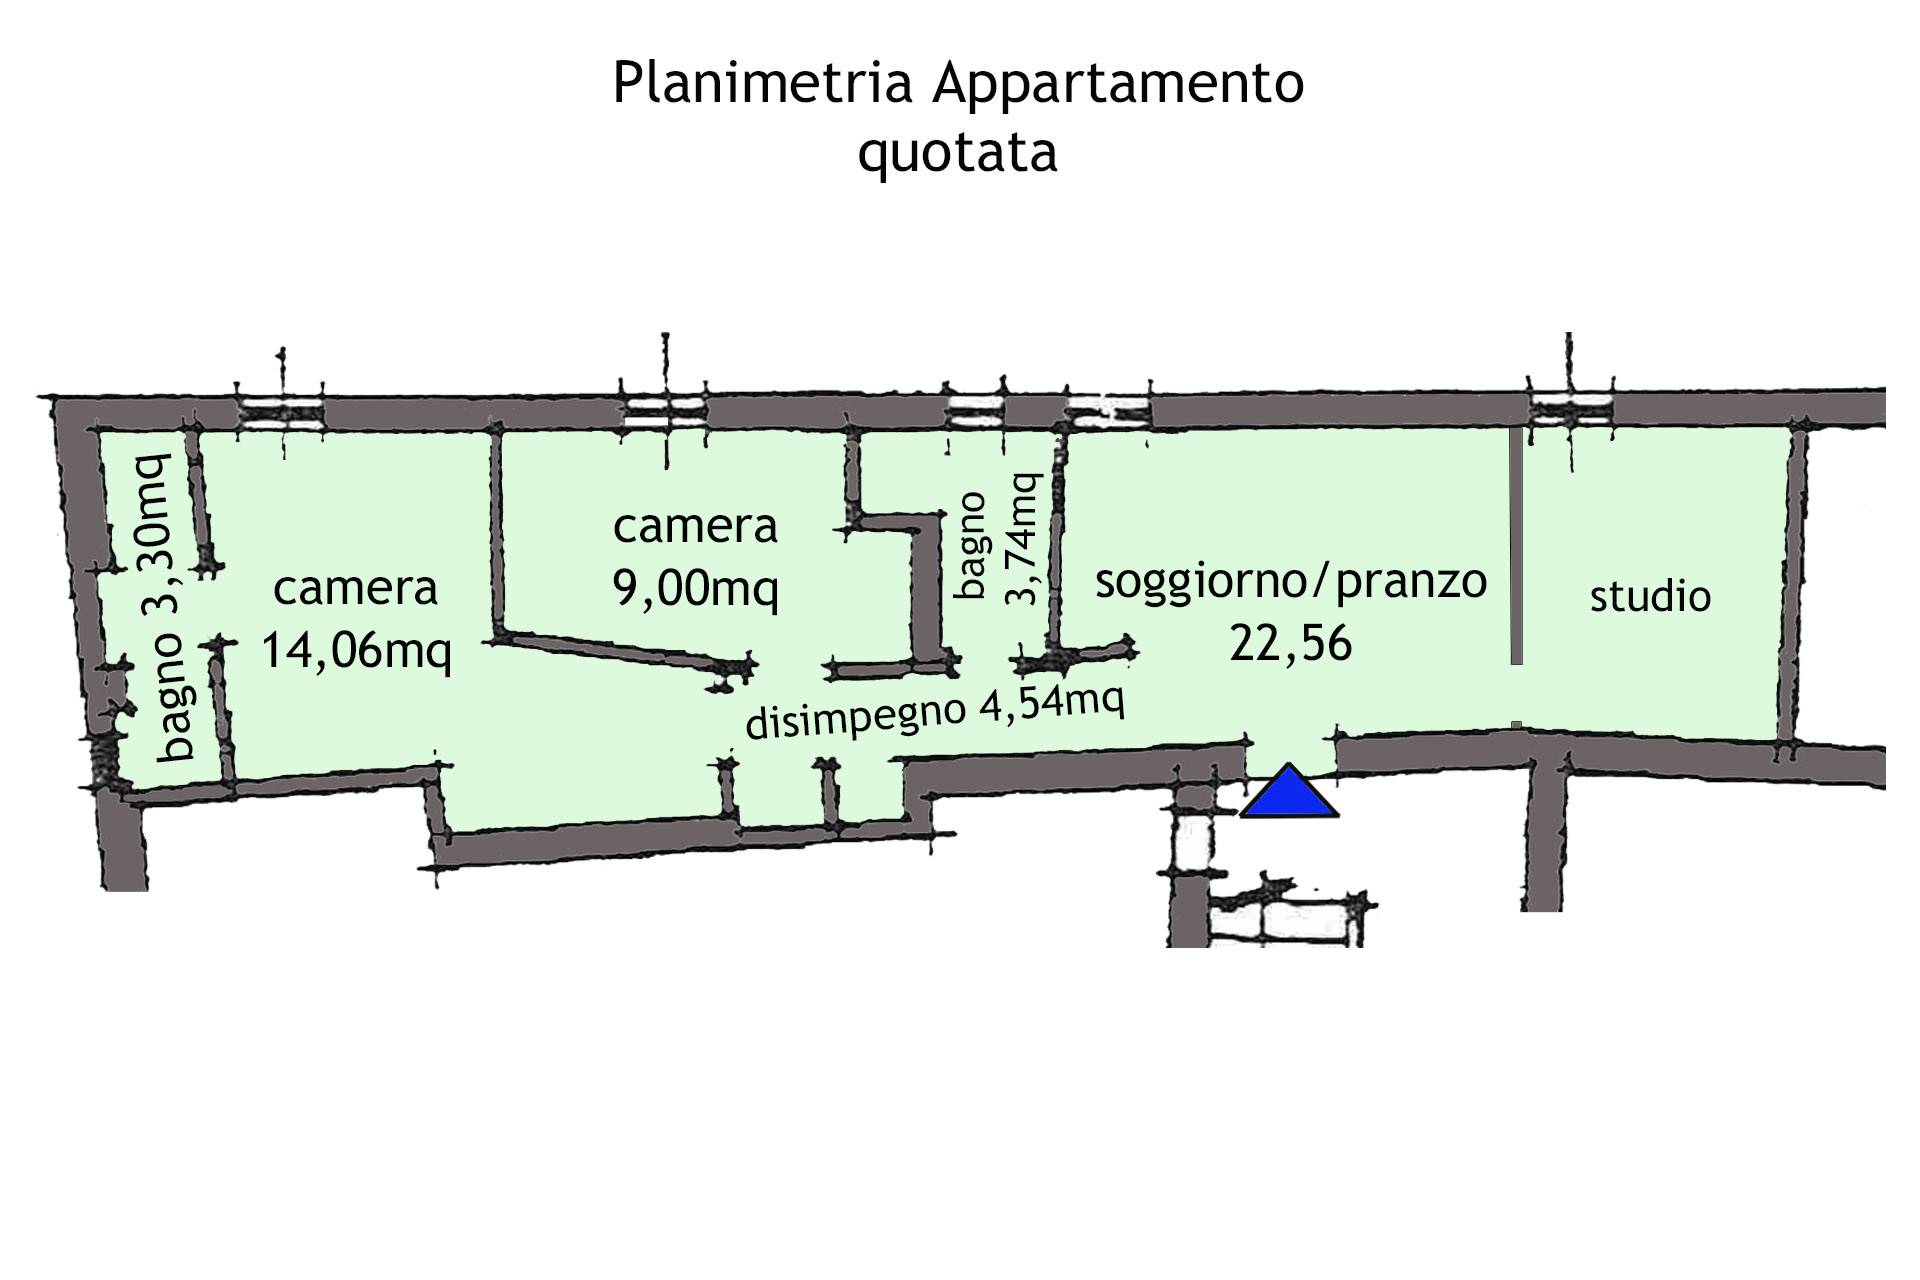 R161 - Planimetria con superfici